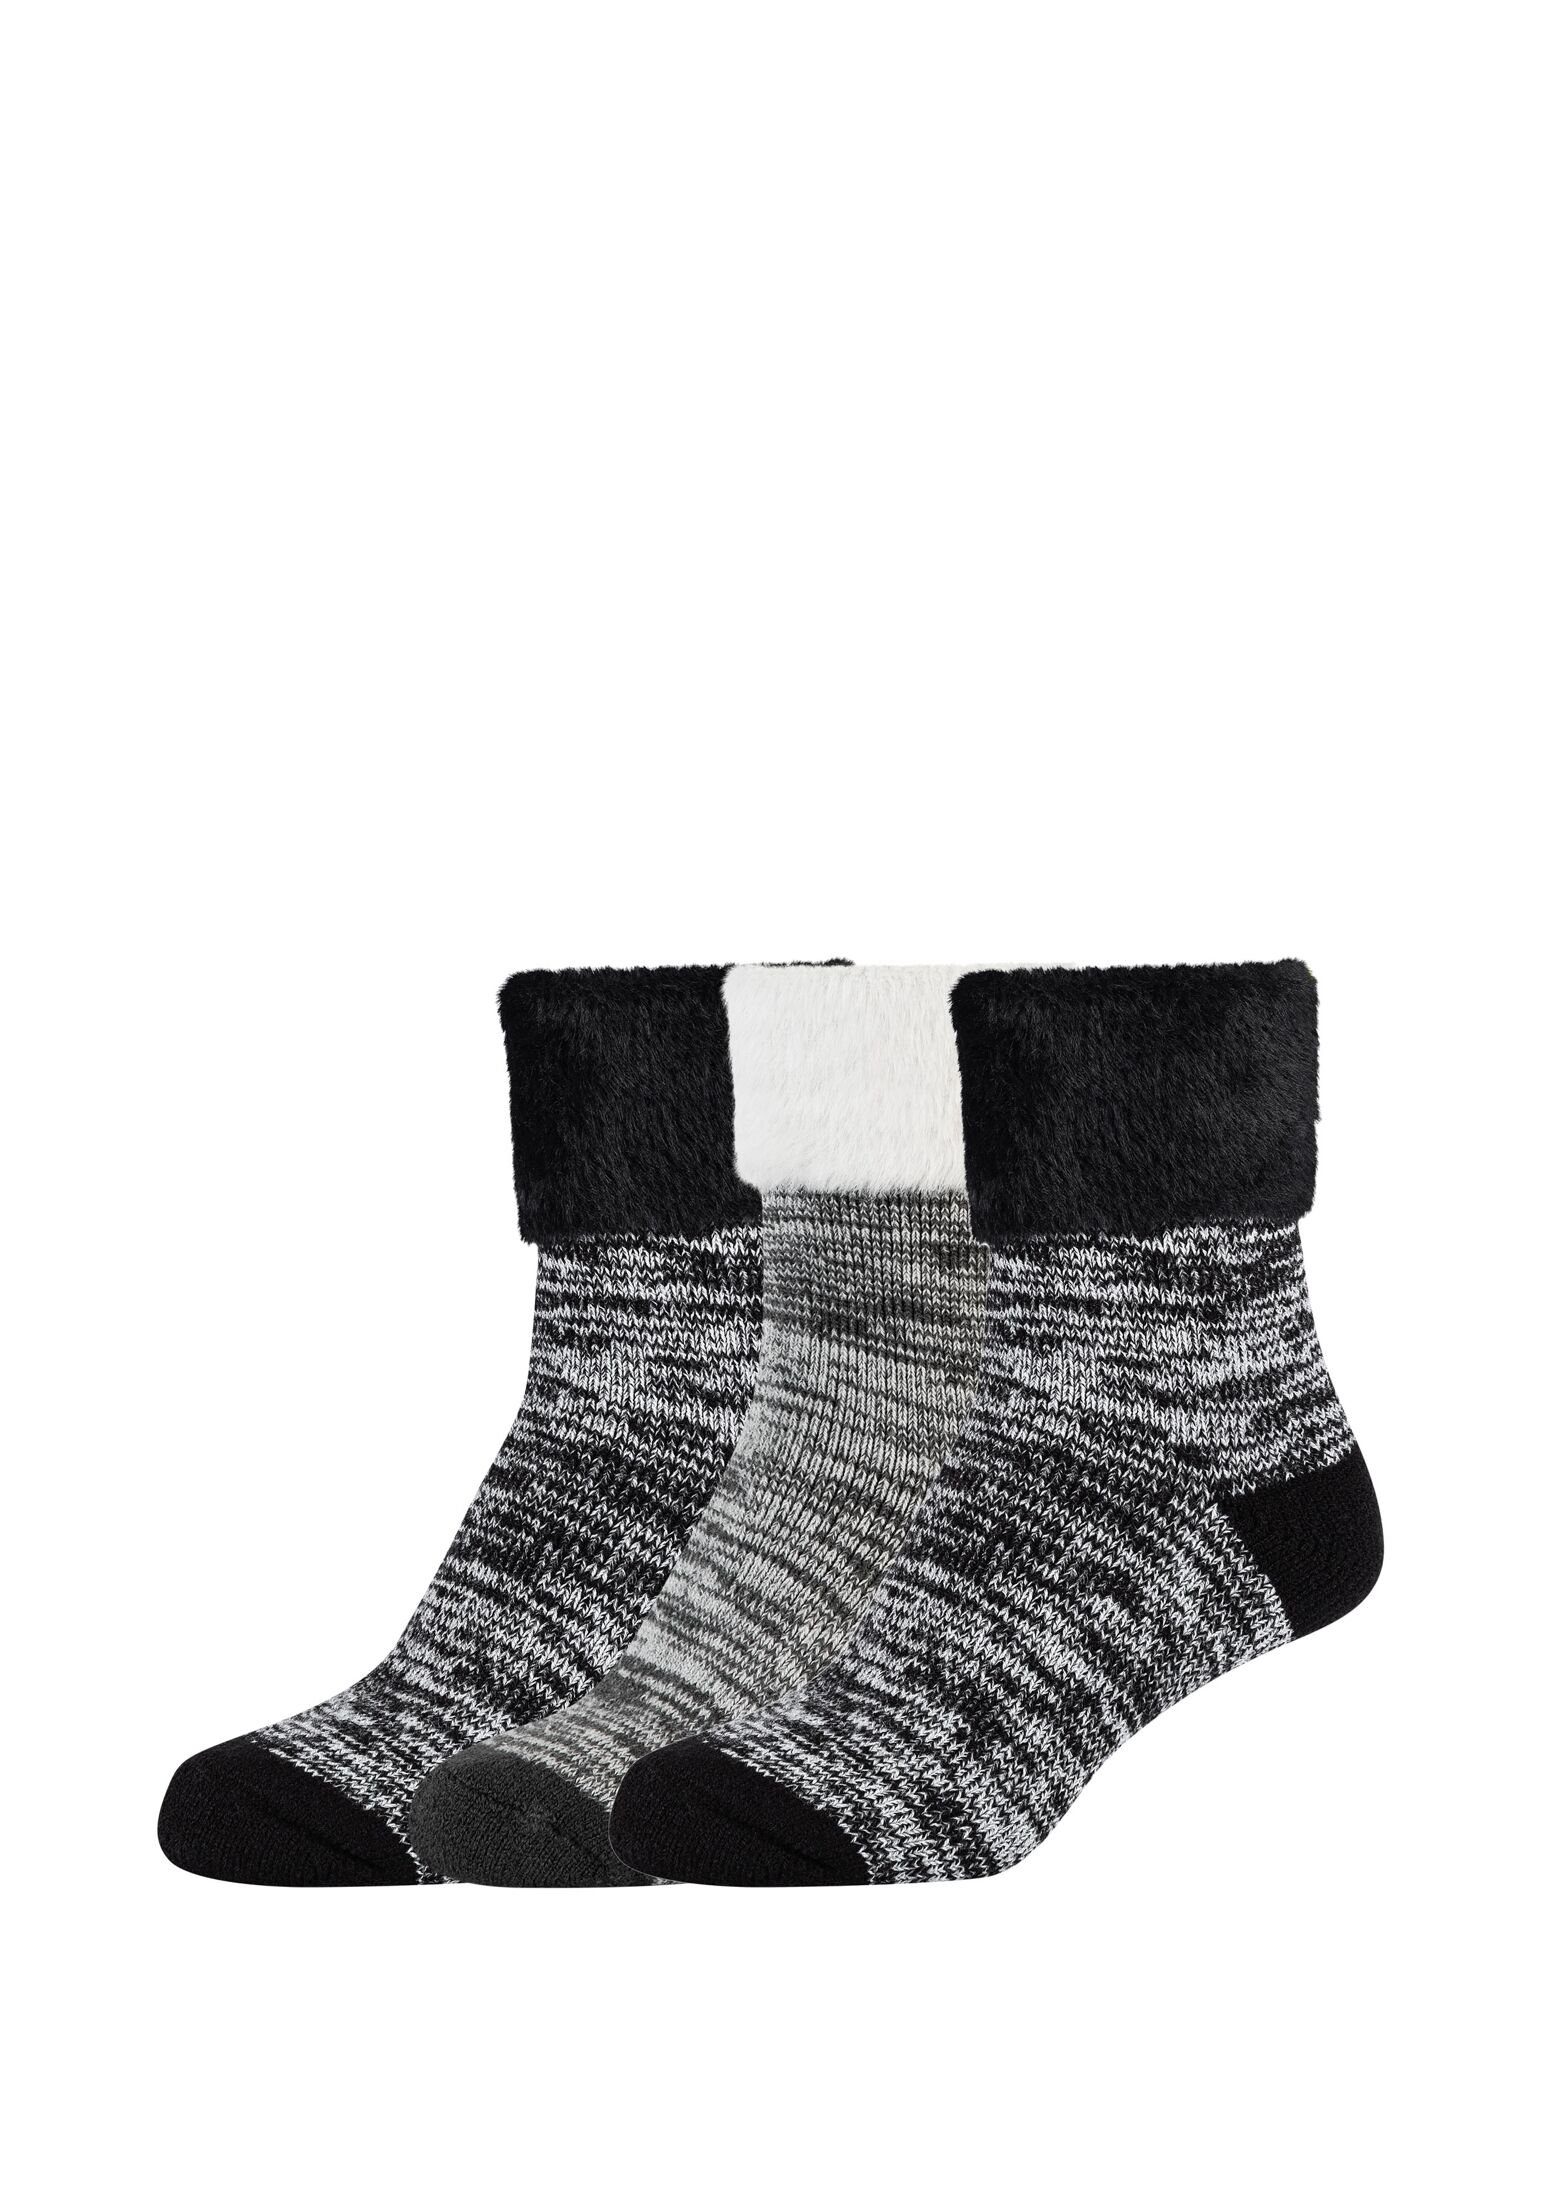 Camano Socken Socken 3er Pack black | Socken